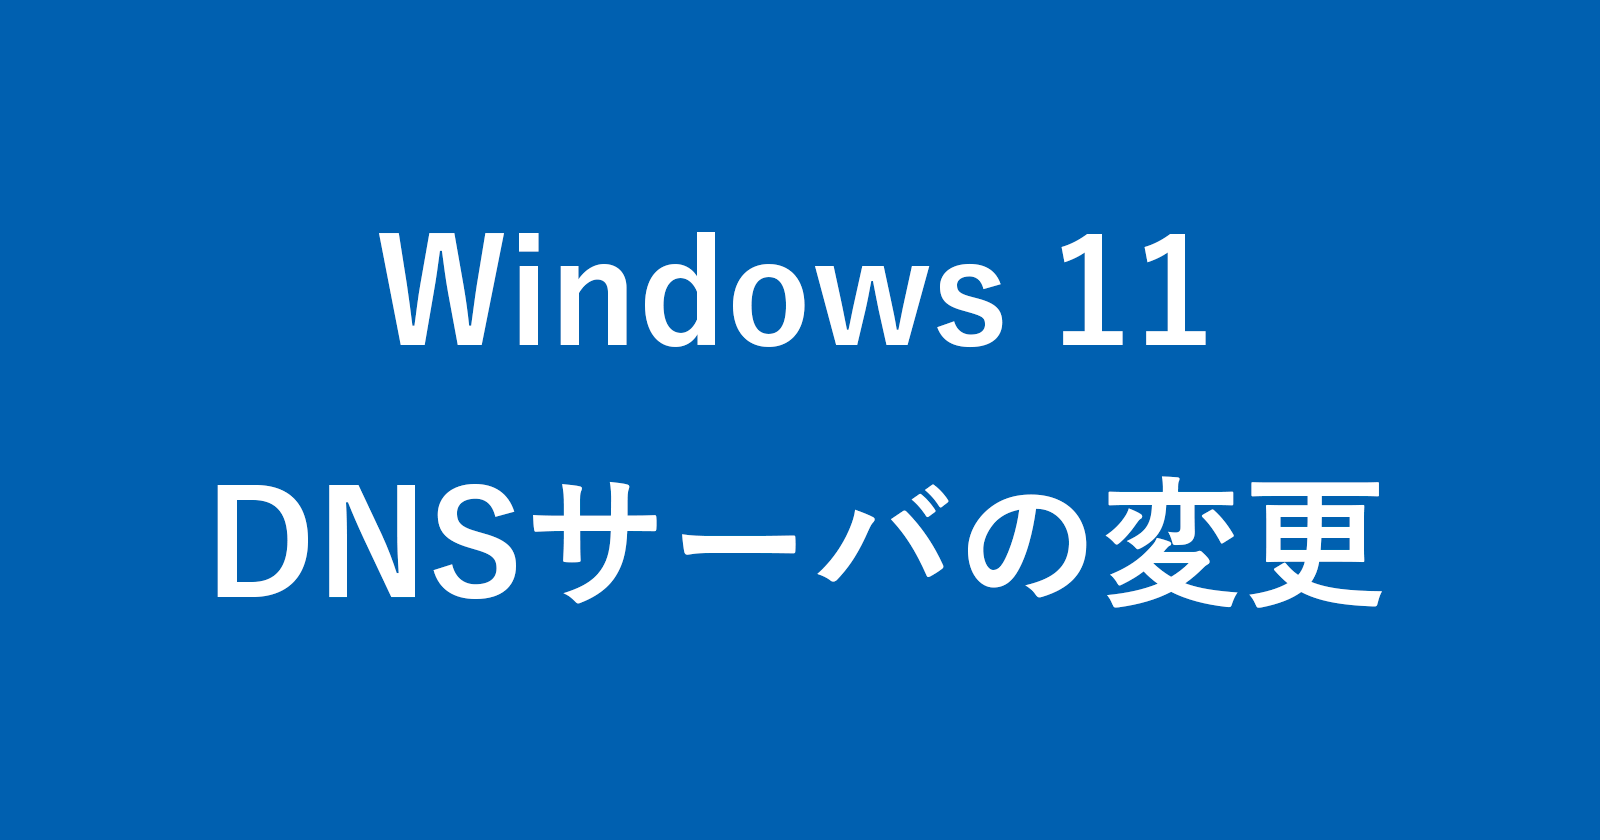 windows 11 dns servers